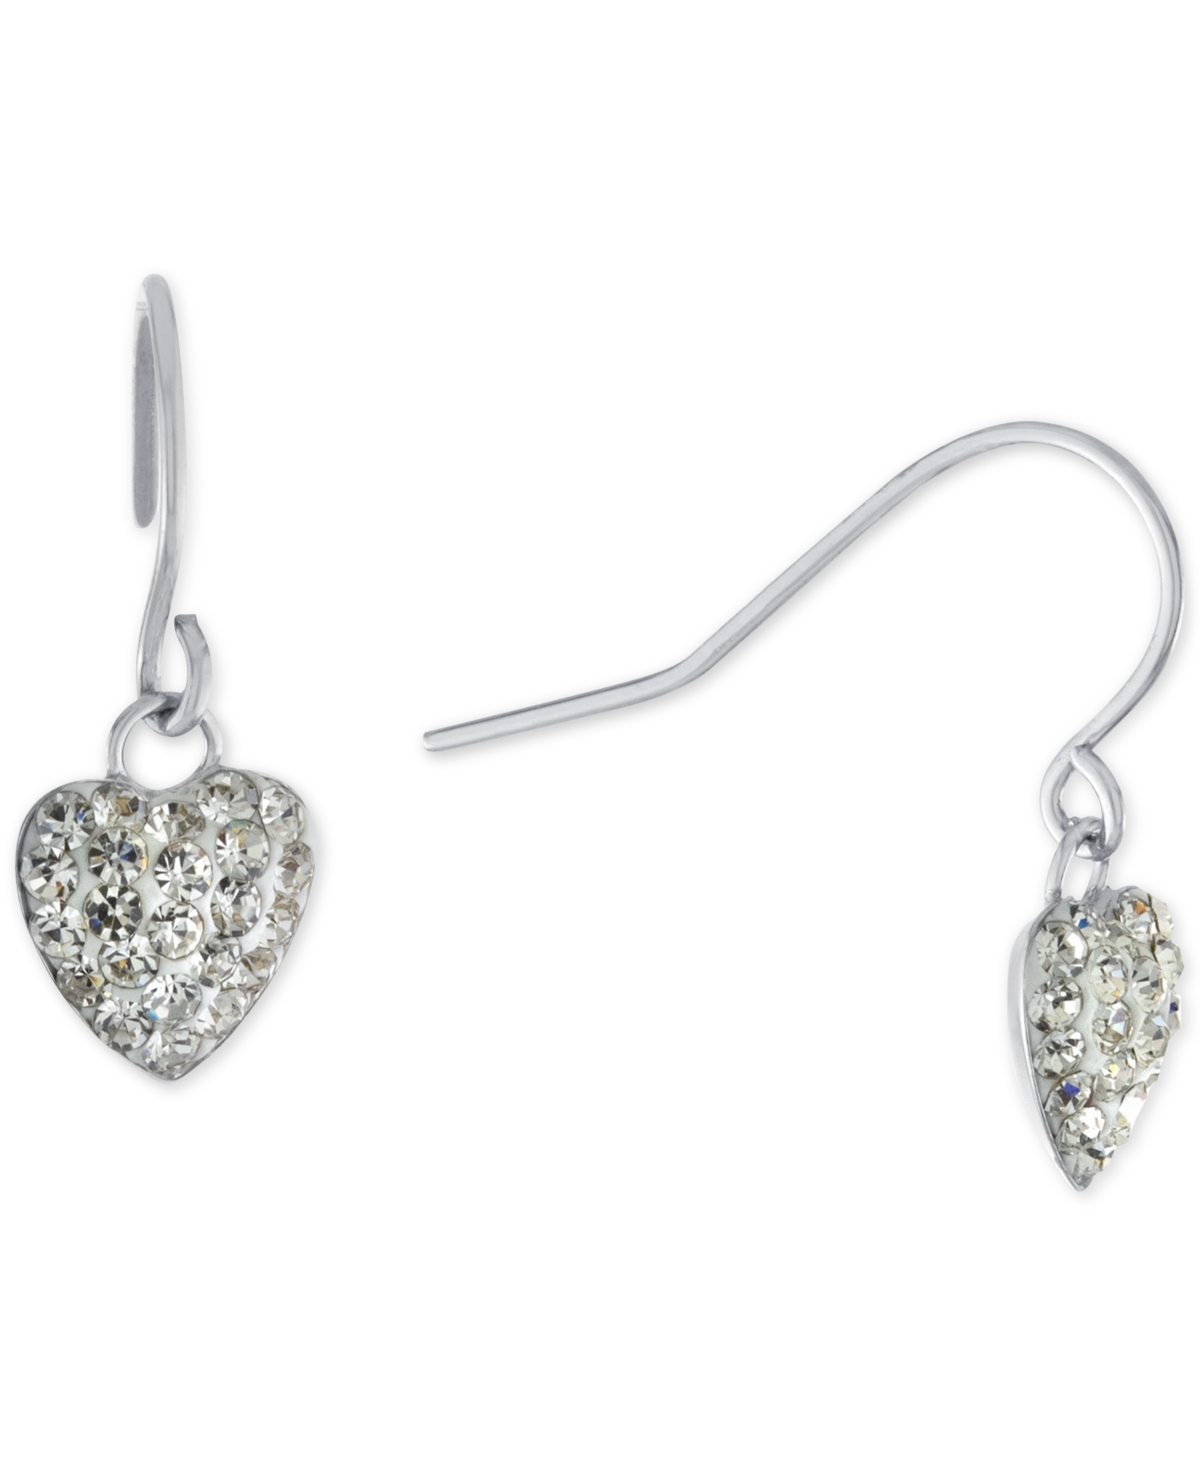 Giani Bernini Crystal Heart Drop Earrings in Sterling Silver, Created for Macy's